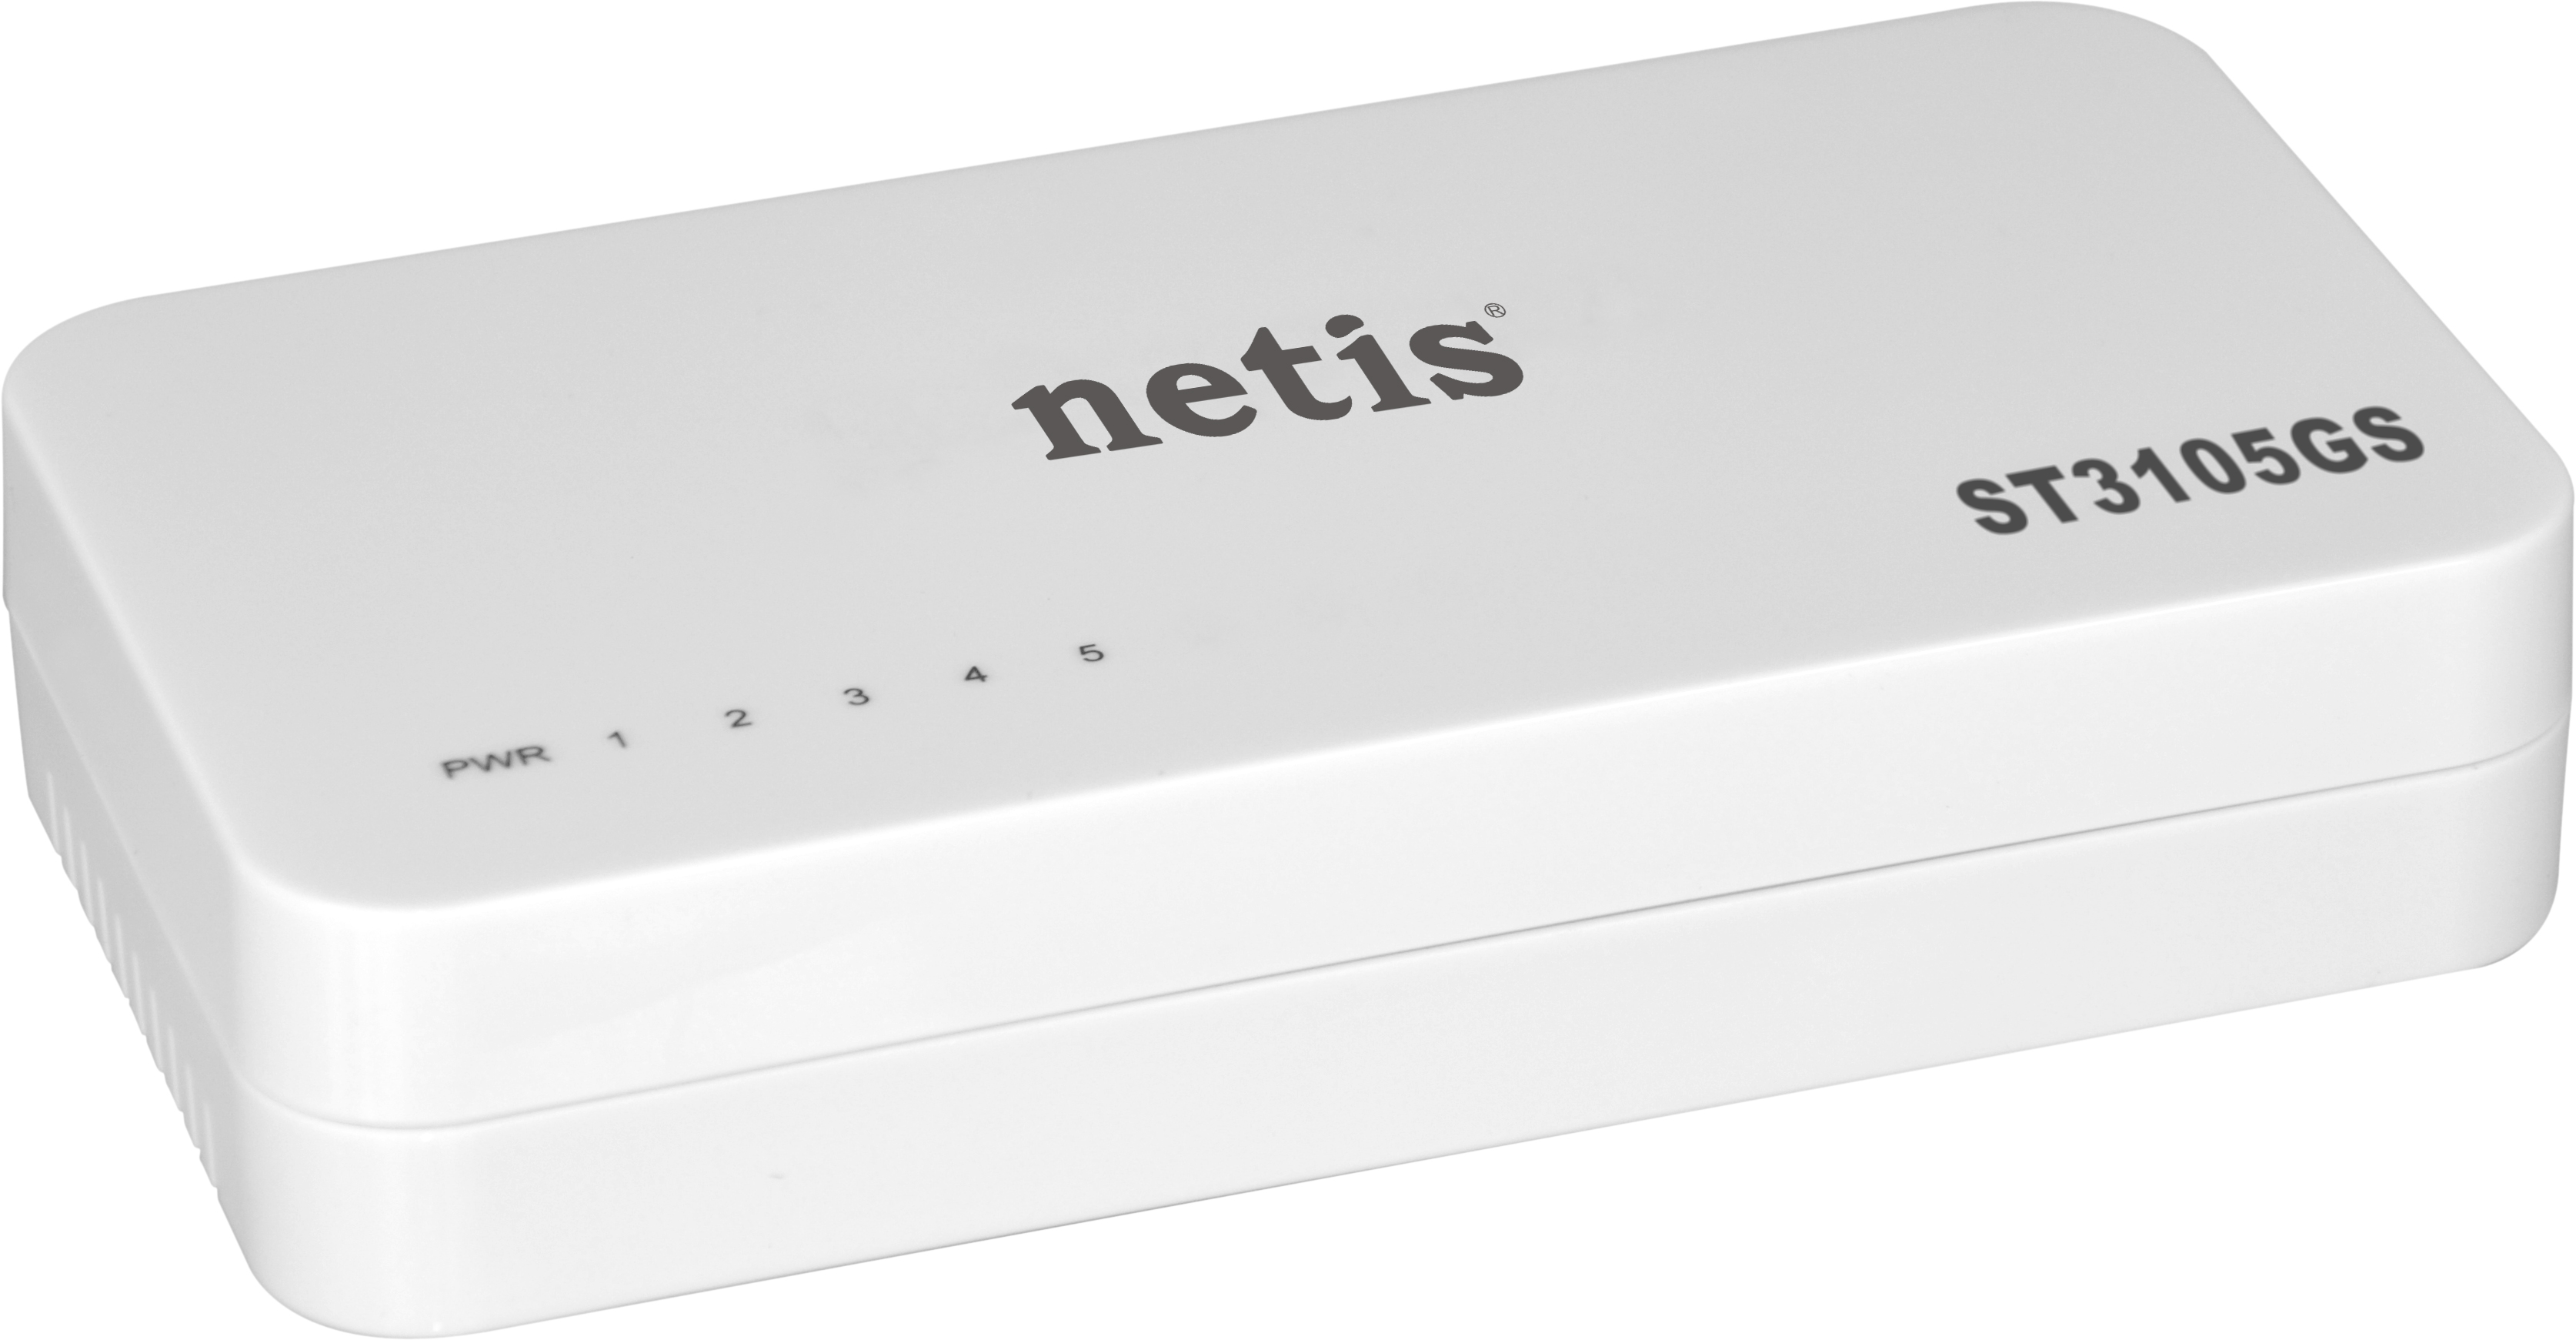 NETIS ST3105GS Switch 5 ports Gigabit